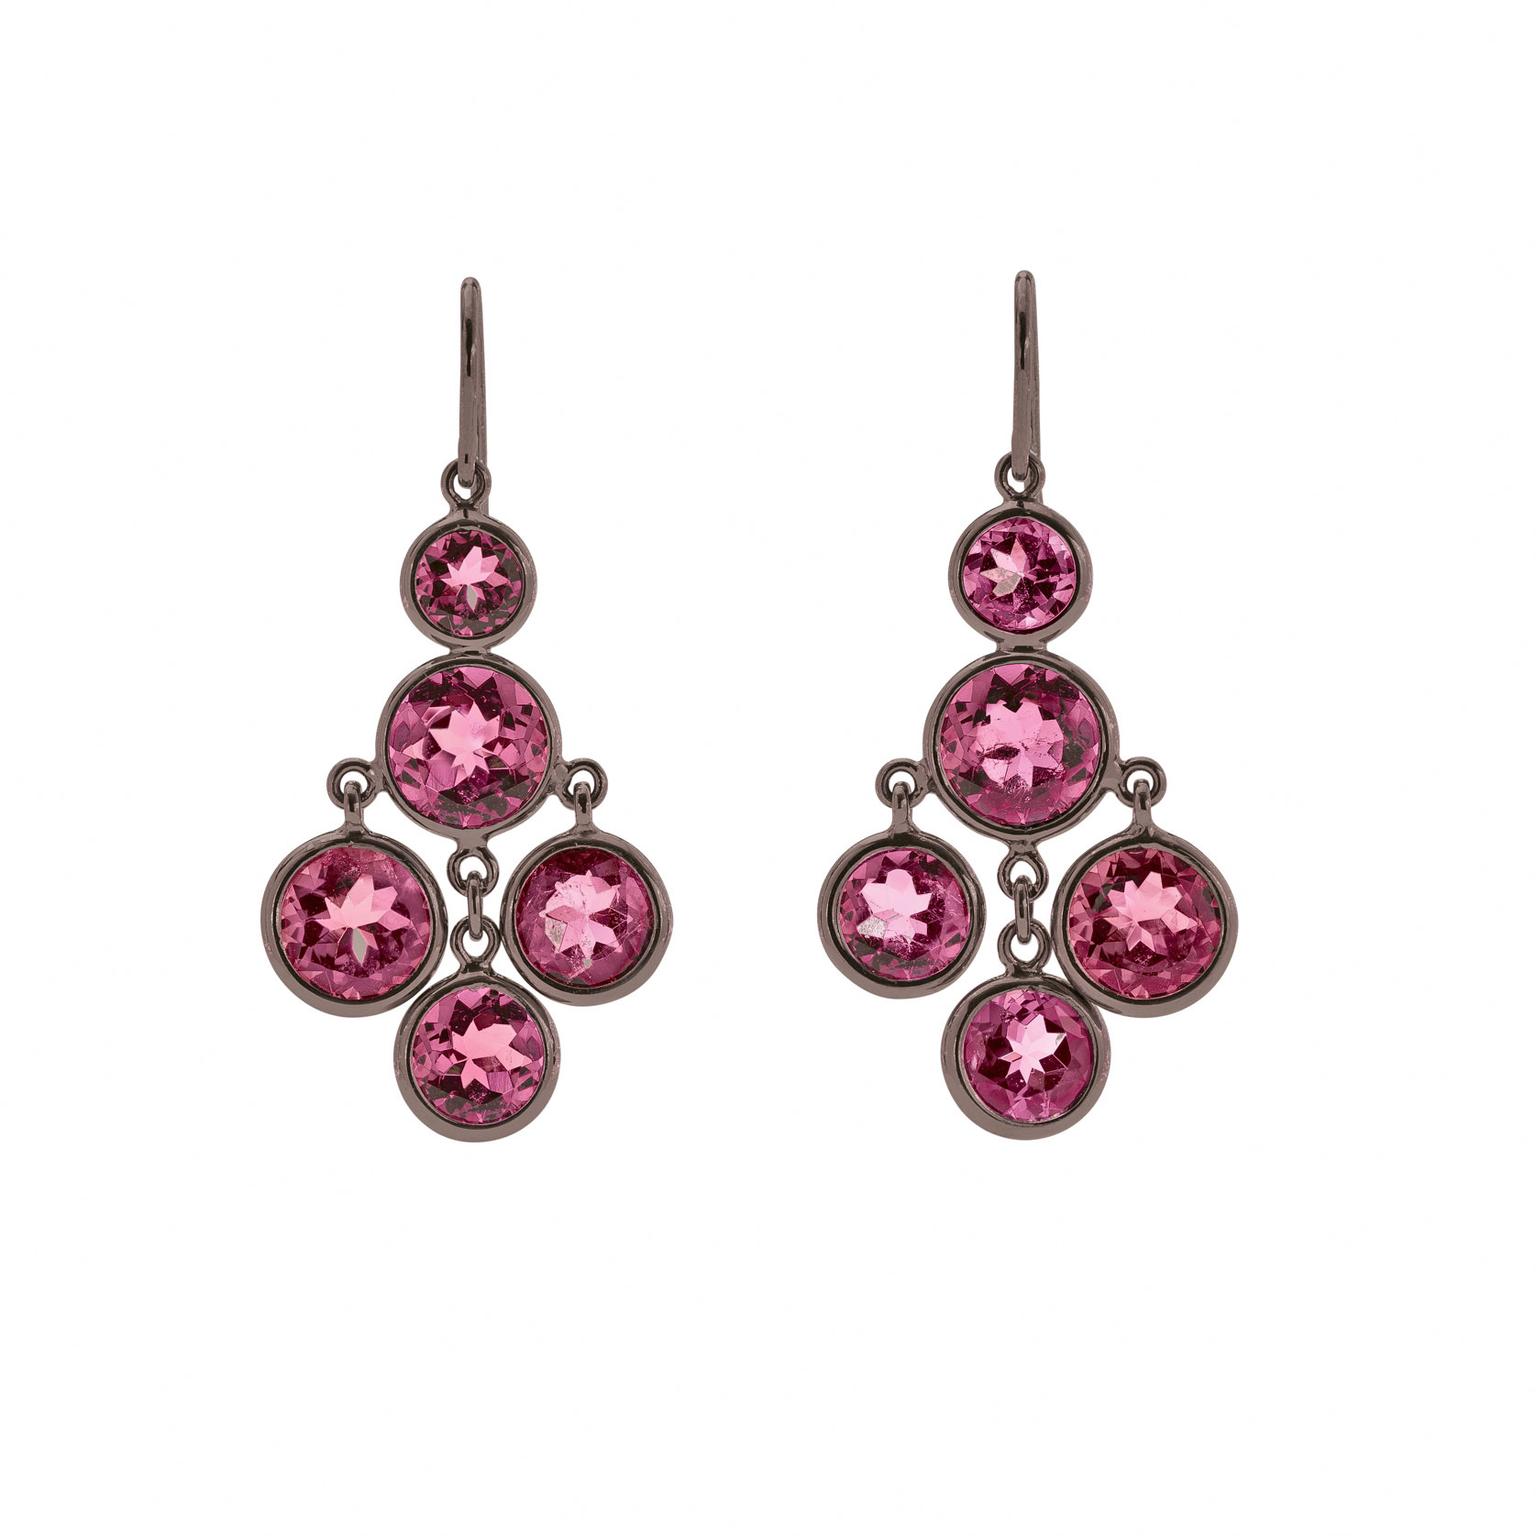 Solange Azagury-Partridge Darling Rose pink tourmaline earrings